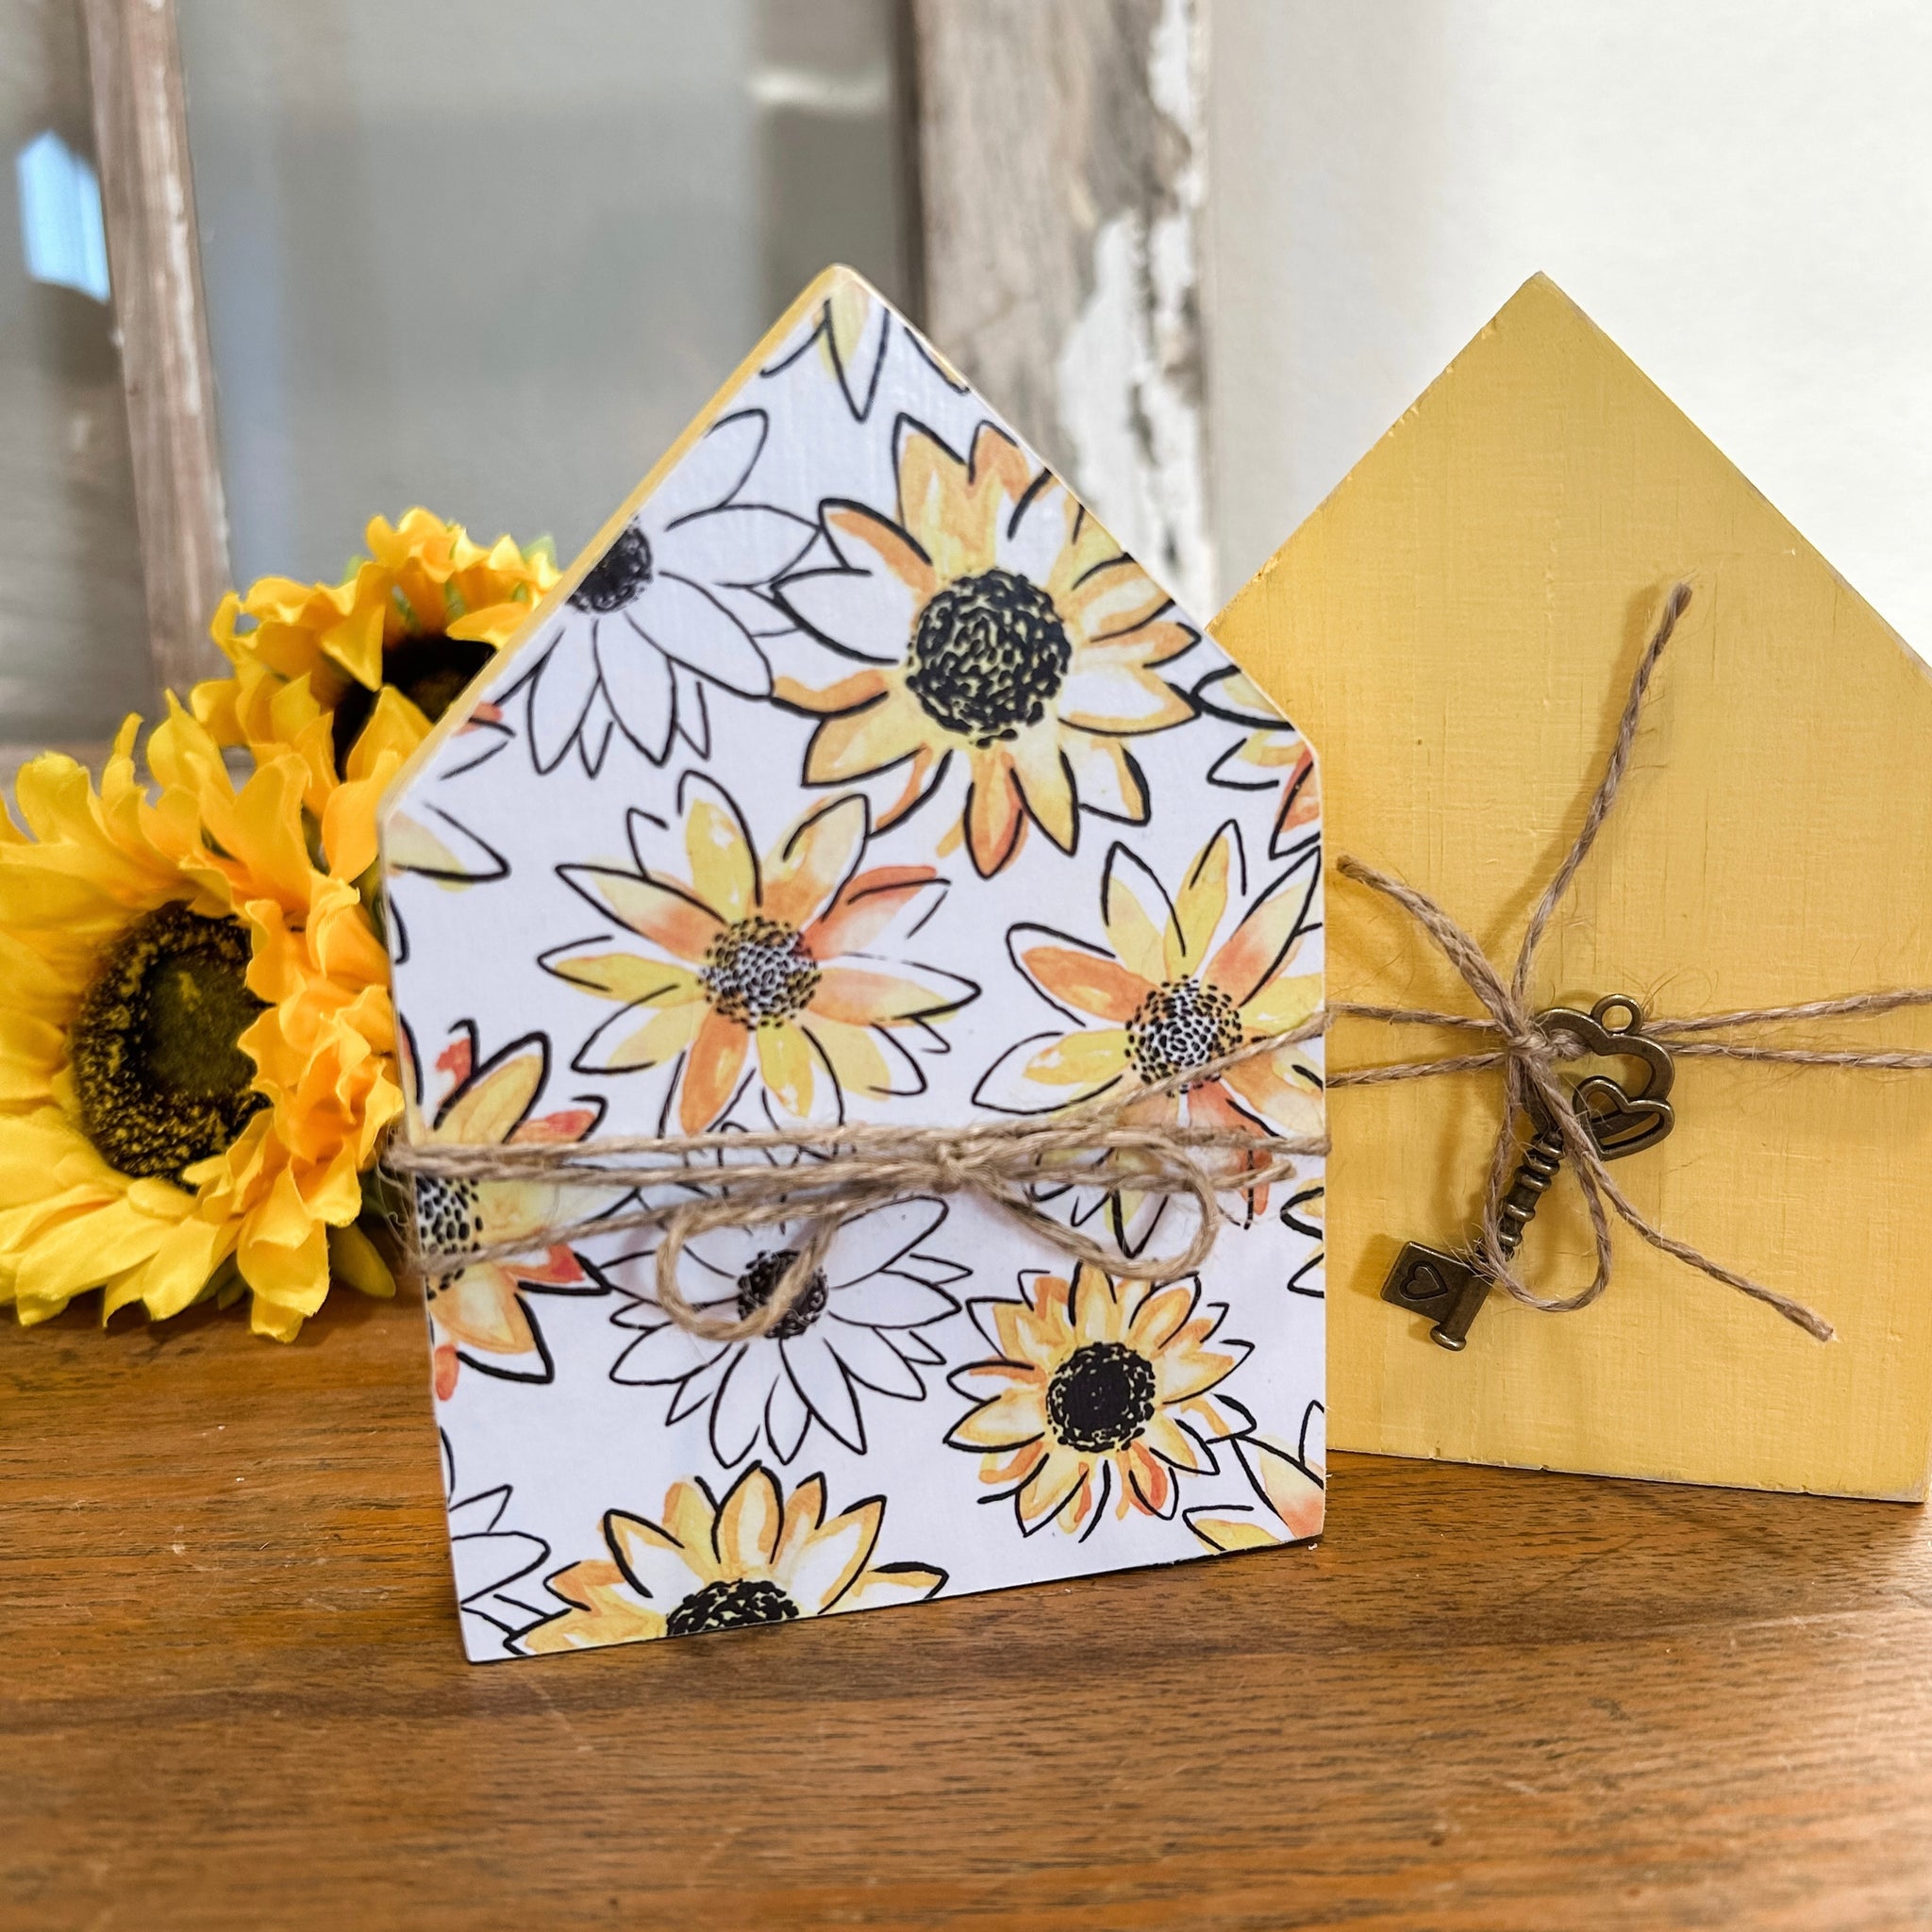 Mini Wood Houses - Sunflowers